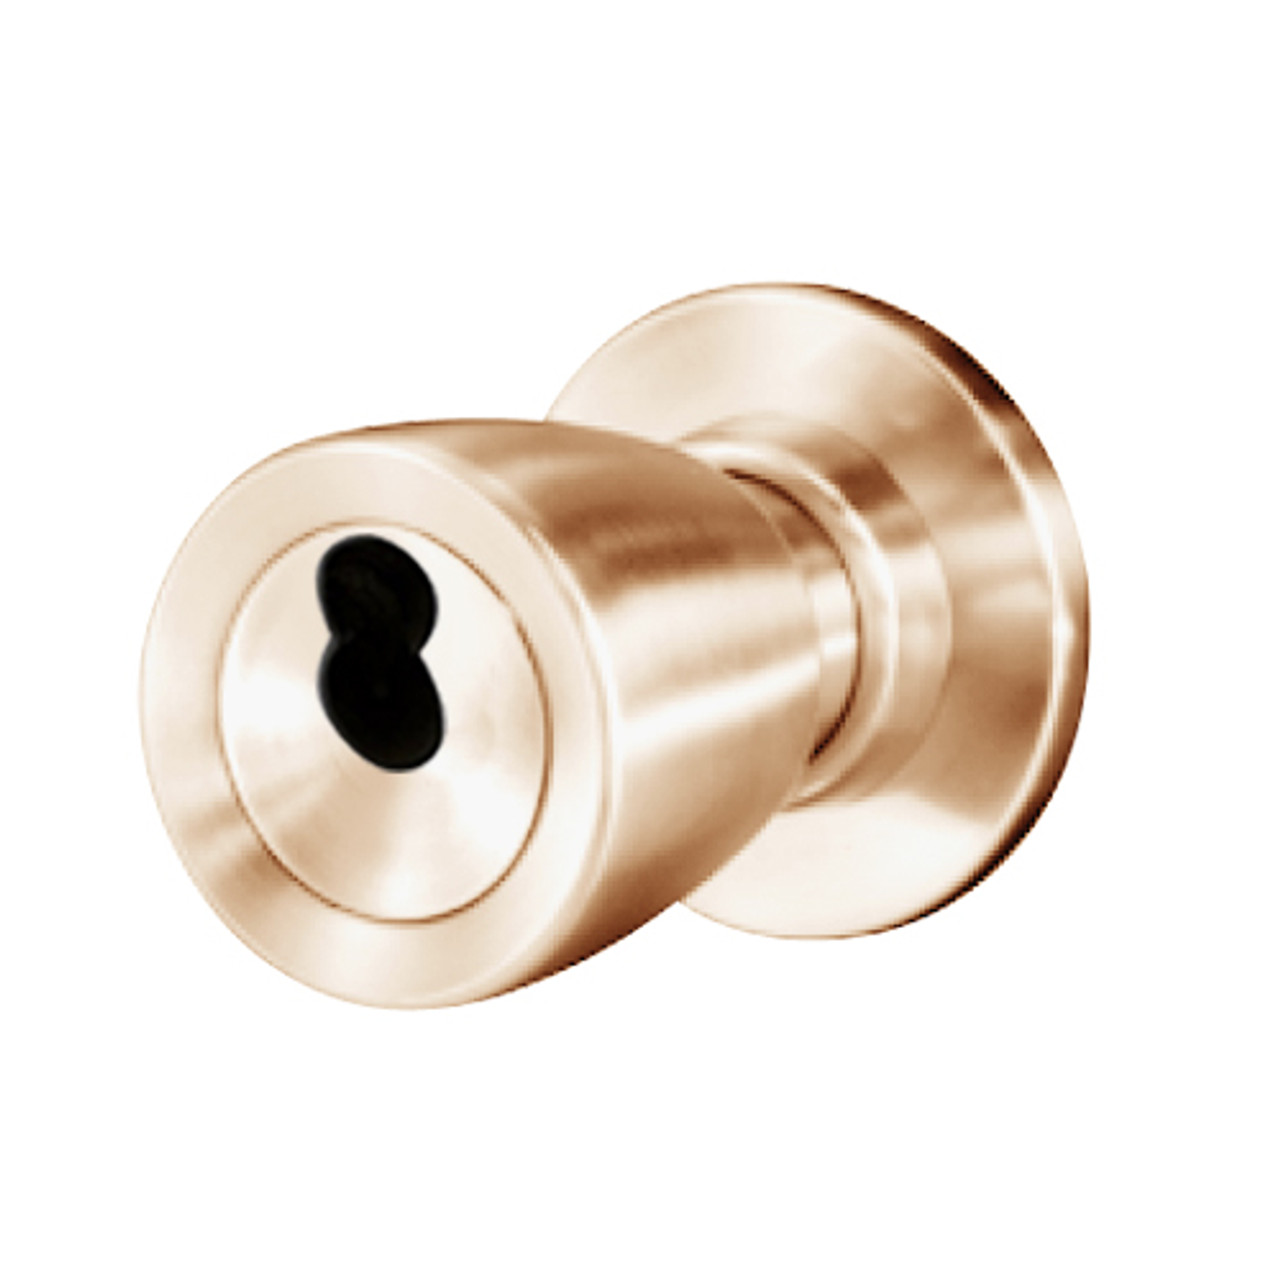 8K47YD6CS3612 Best 8K Series Exit Heavy Duty Cylindrical Knob Locks with Tulip Style in Satin Bronze